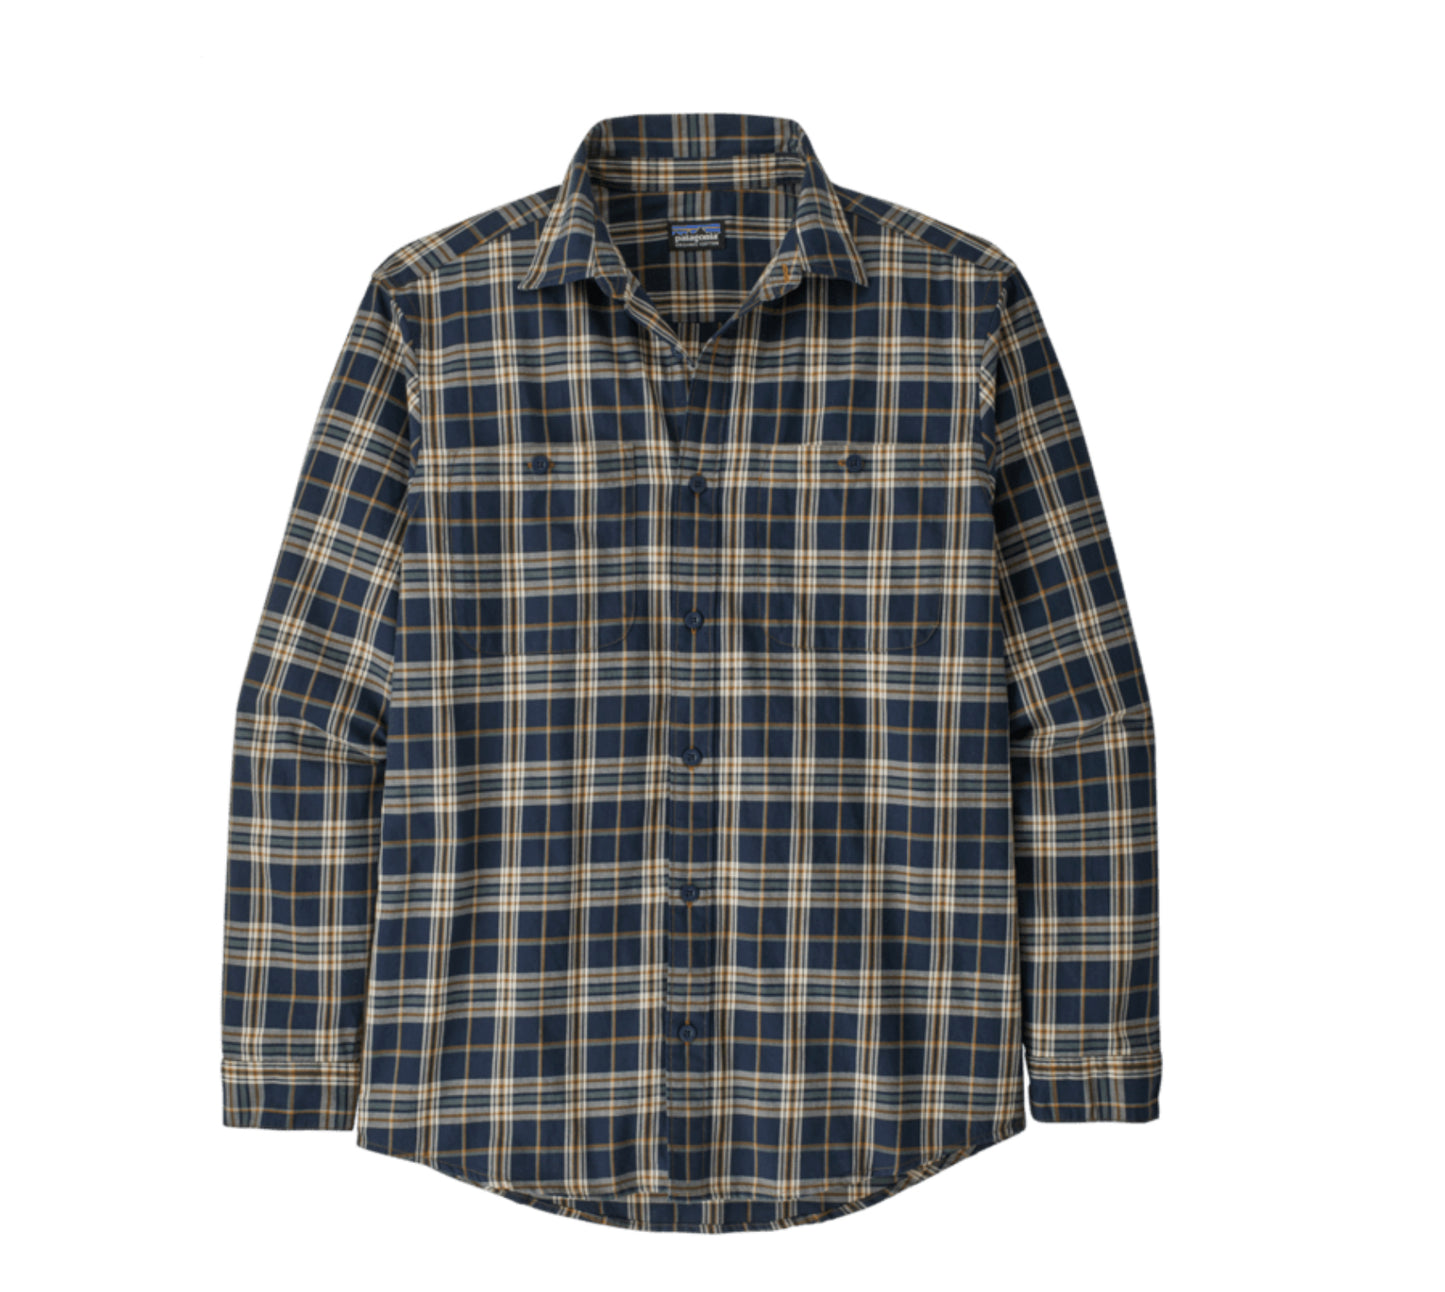 Patagonia L/S Pima Cotton Shirt